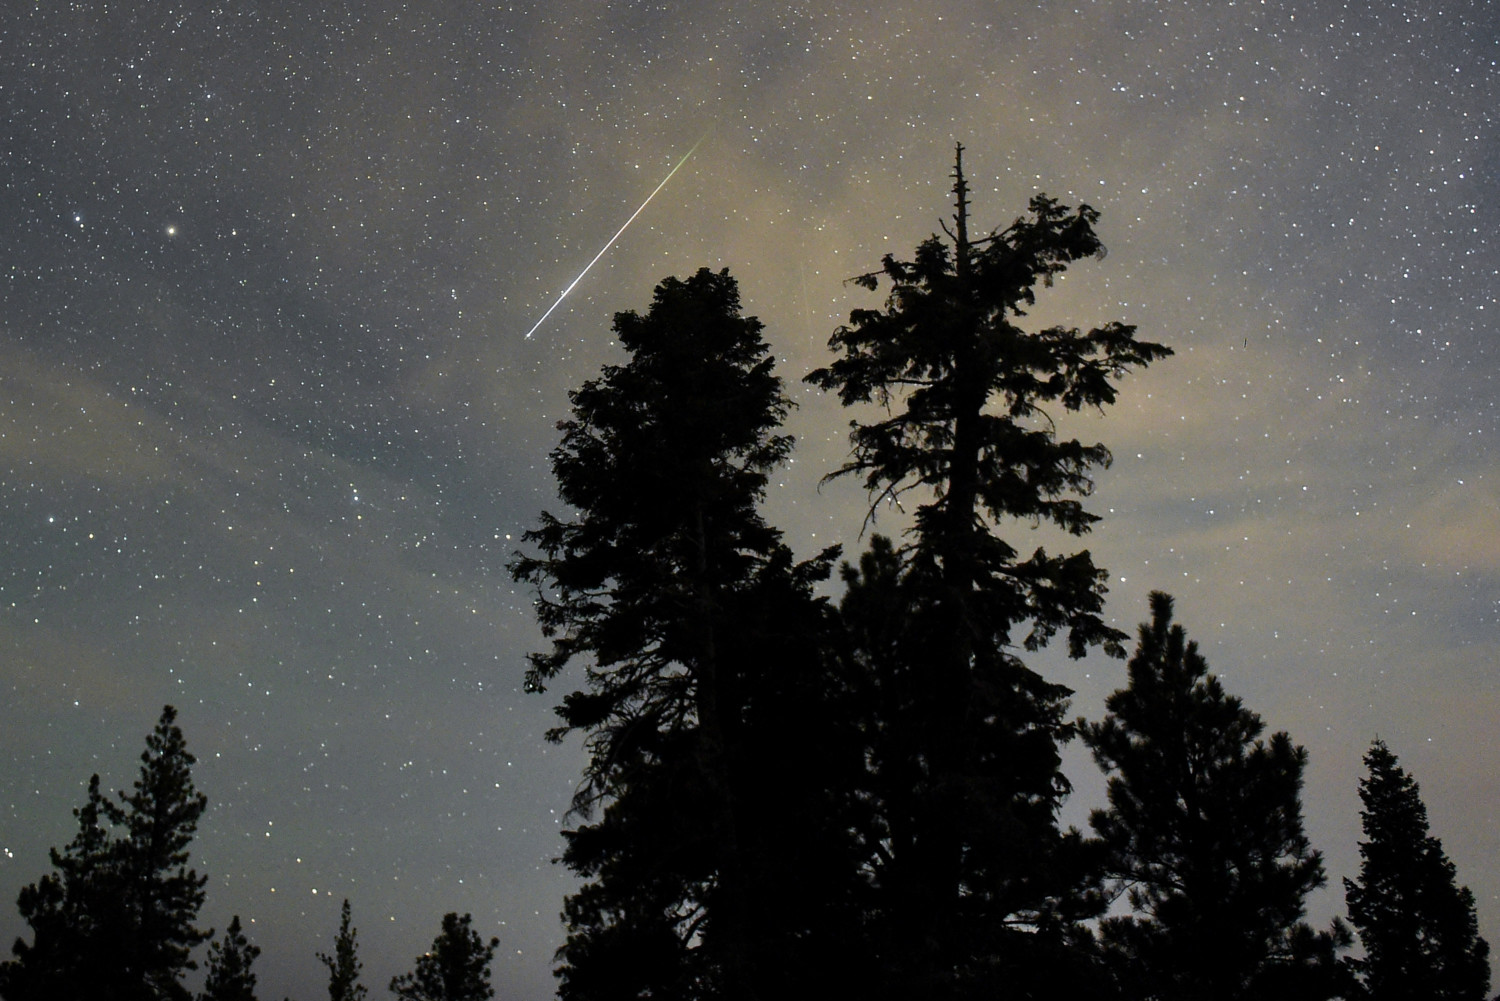 Perseid meteor shower photo